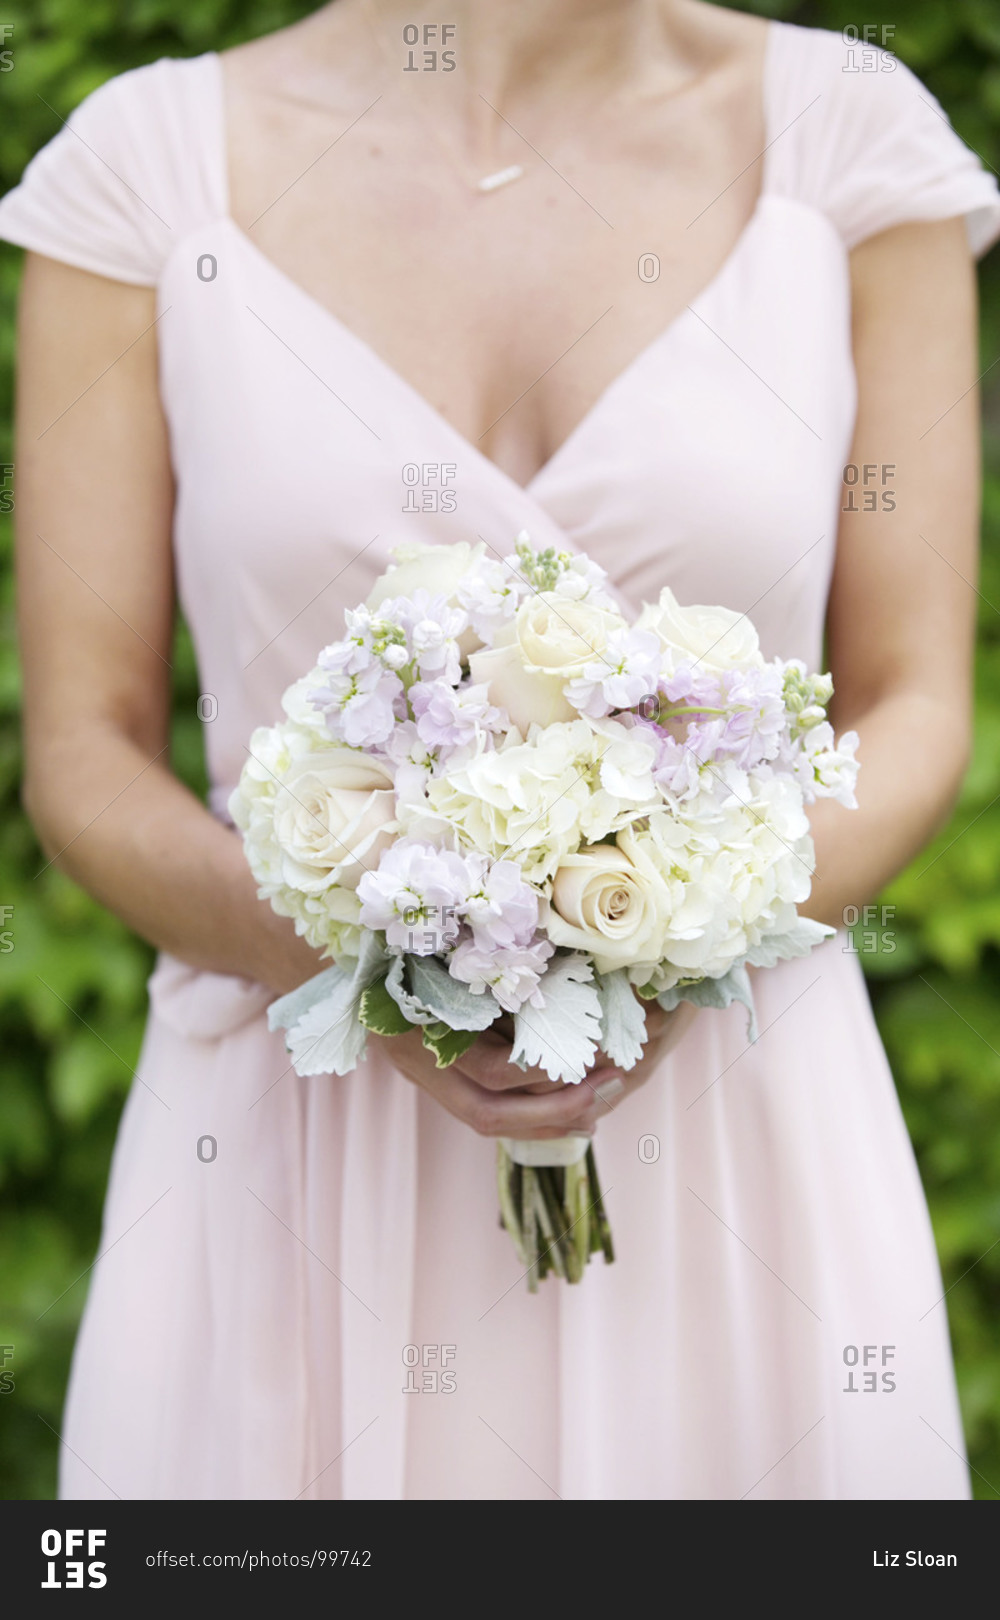 Bridesmaid holding a wedding bouquet